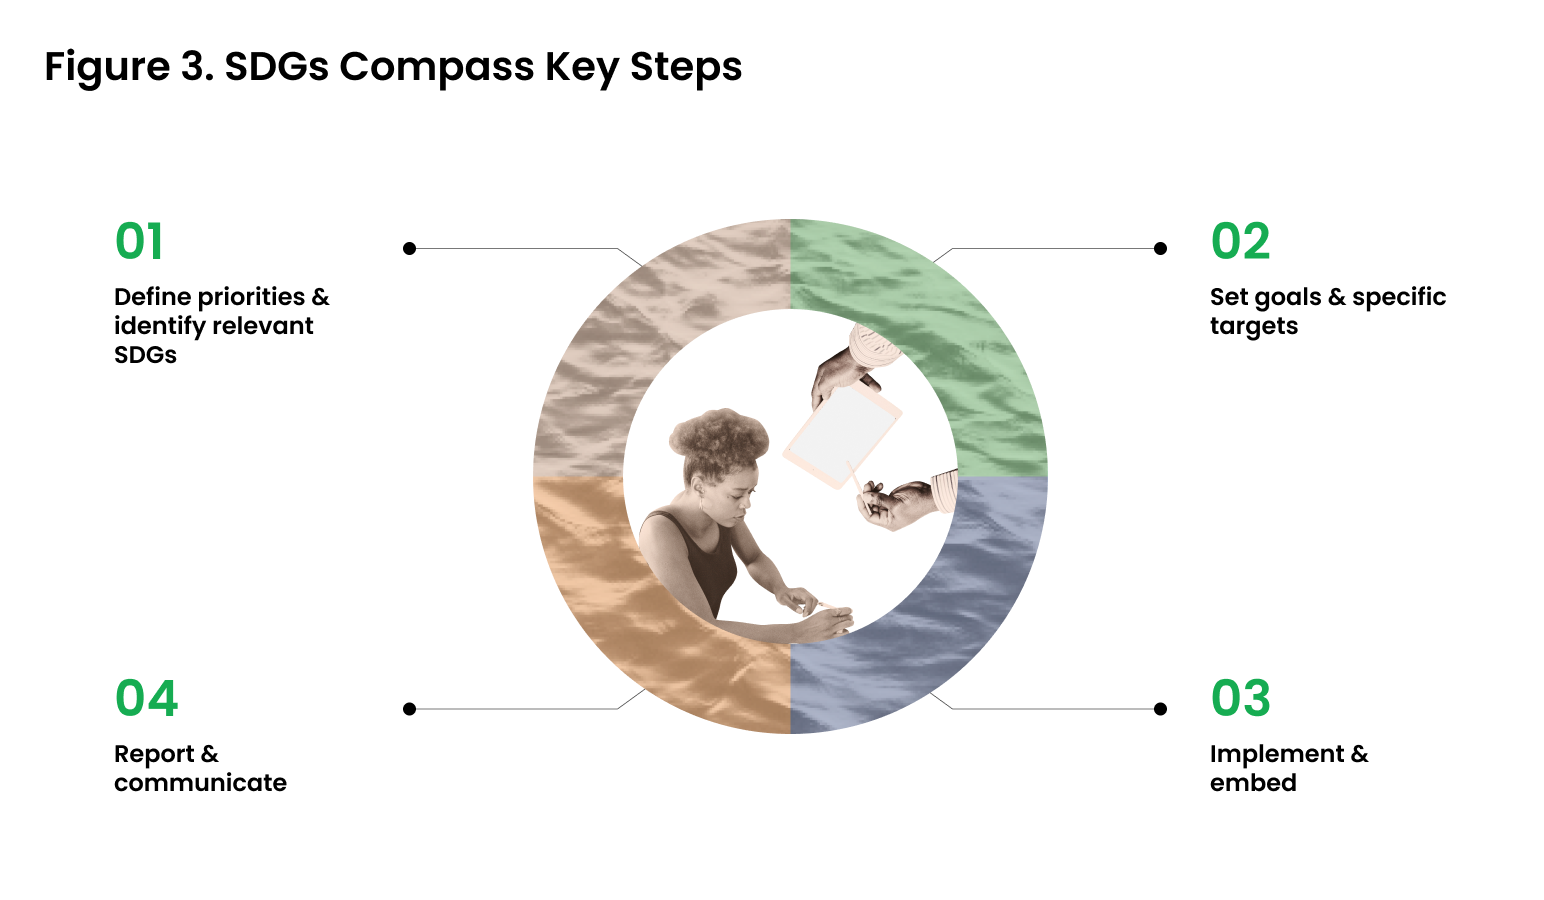 Figure 3. Key Steps of the SDGs Compass